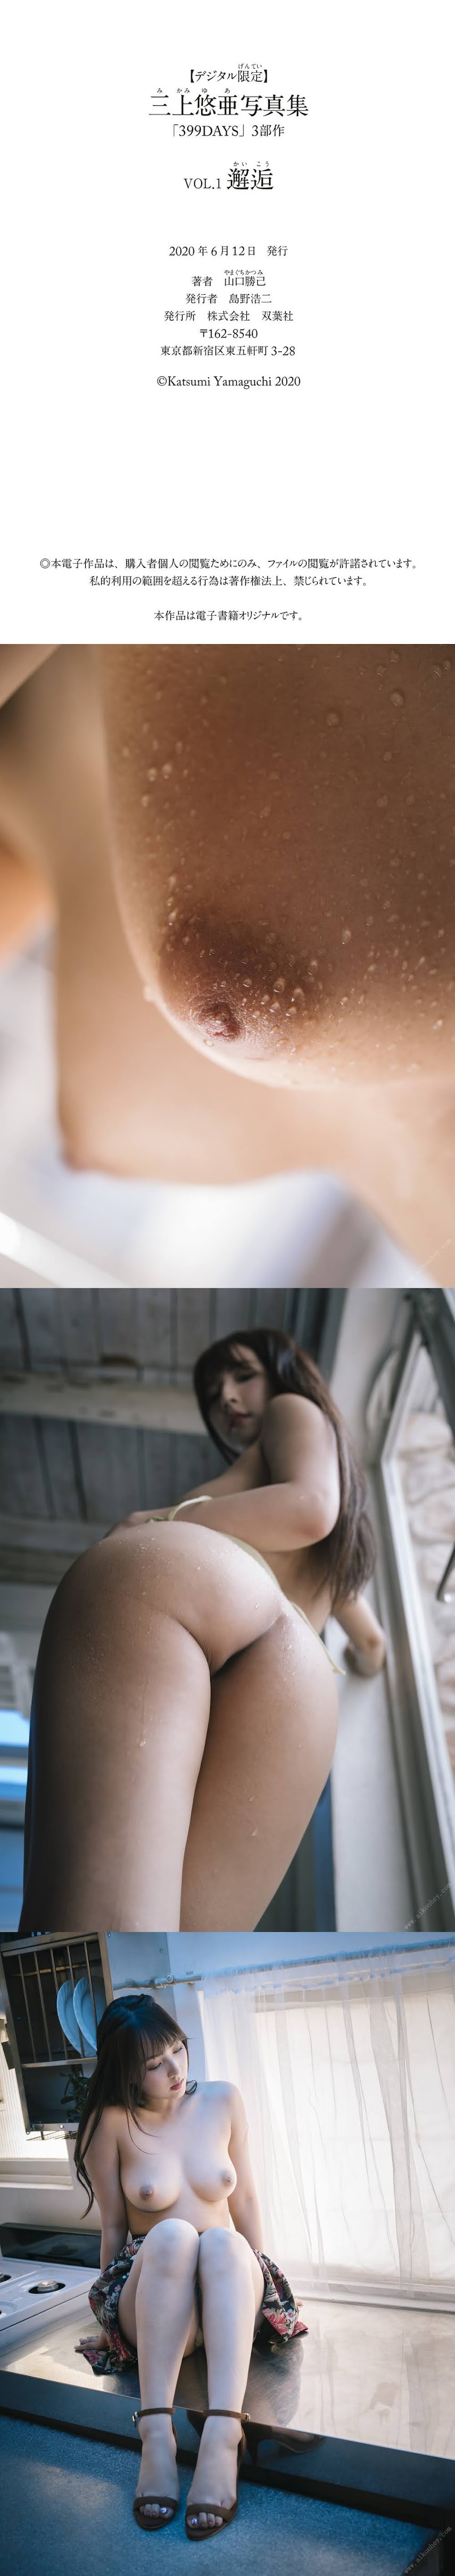 [Digital Photobook] Yua Mikami 三上悠亜写真集「399DAYS」3部作 VOL.1 邂逅 (2020-06-11)   P215013 sexy girls image jav